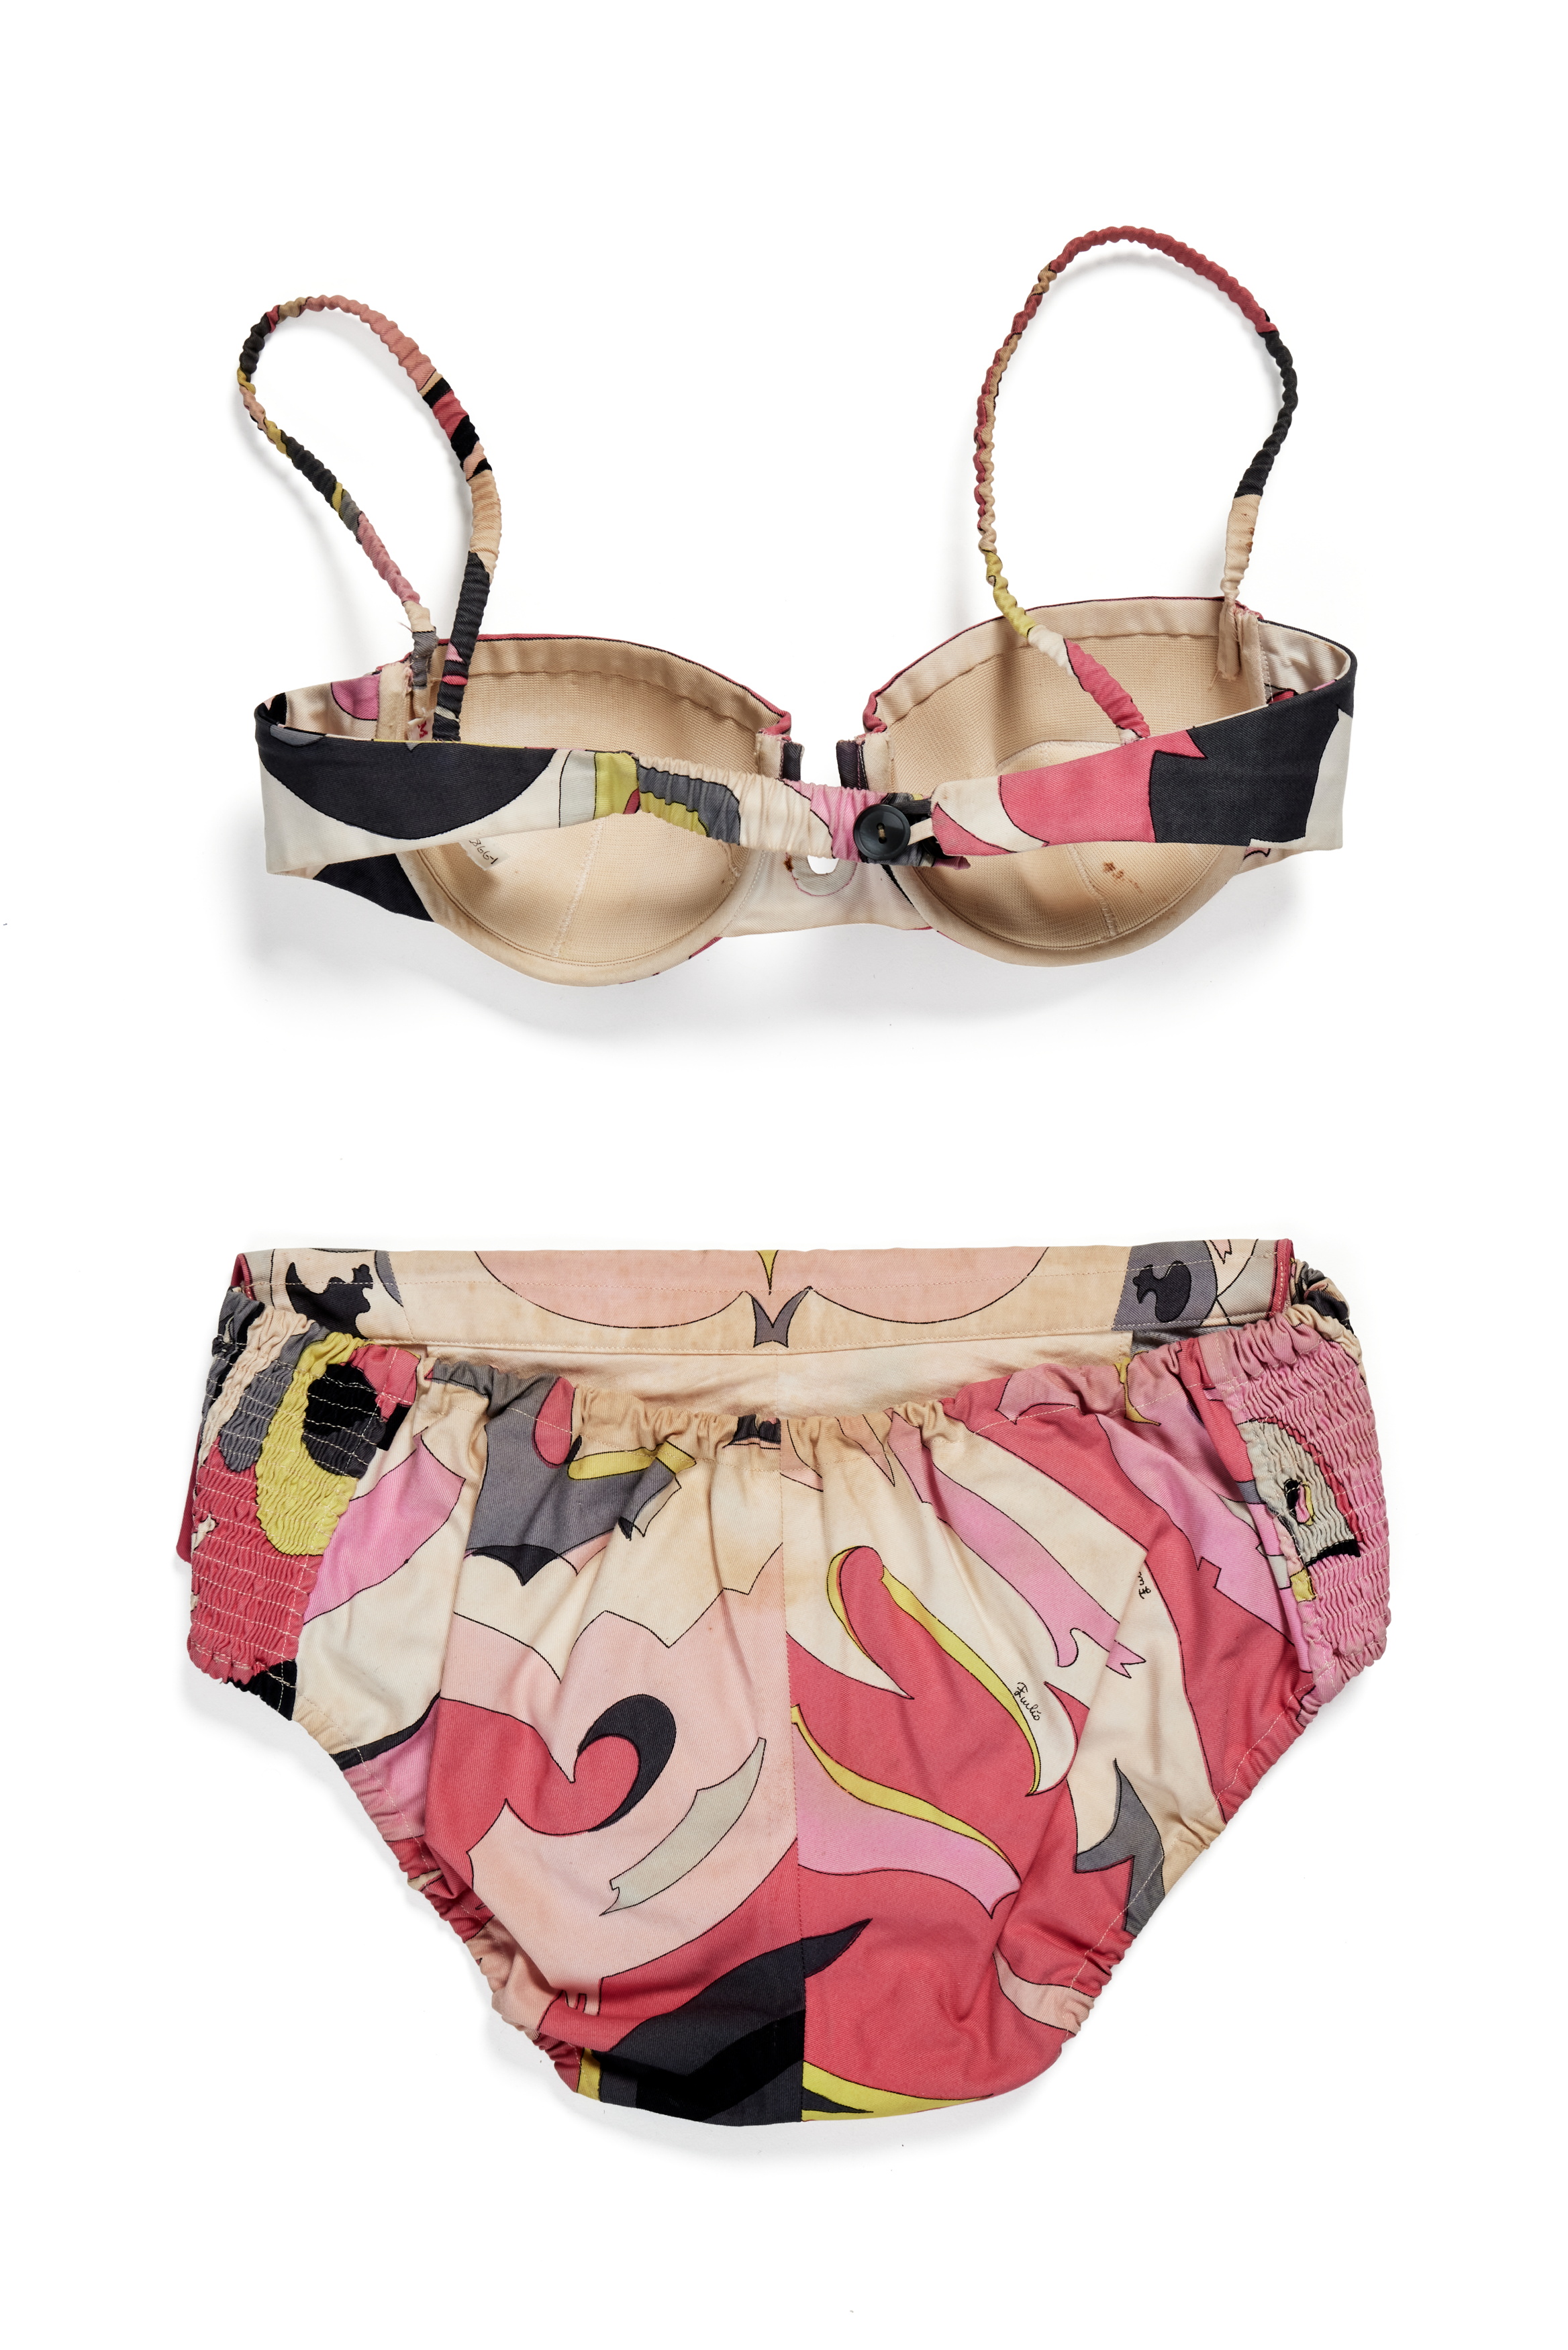 Bikini swimsuit by Emilio Pucci